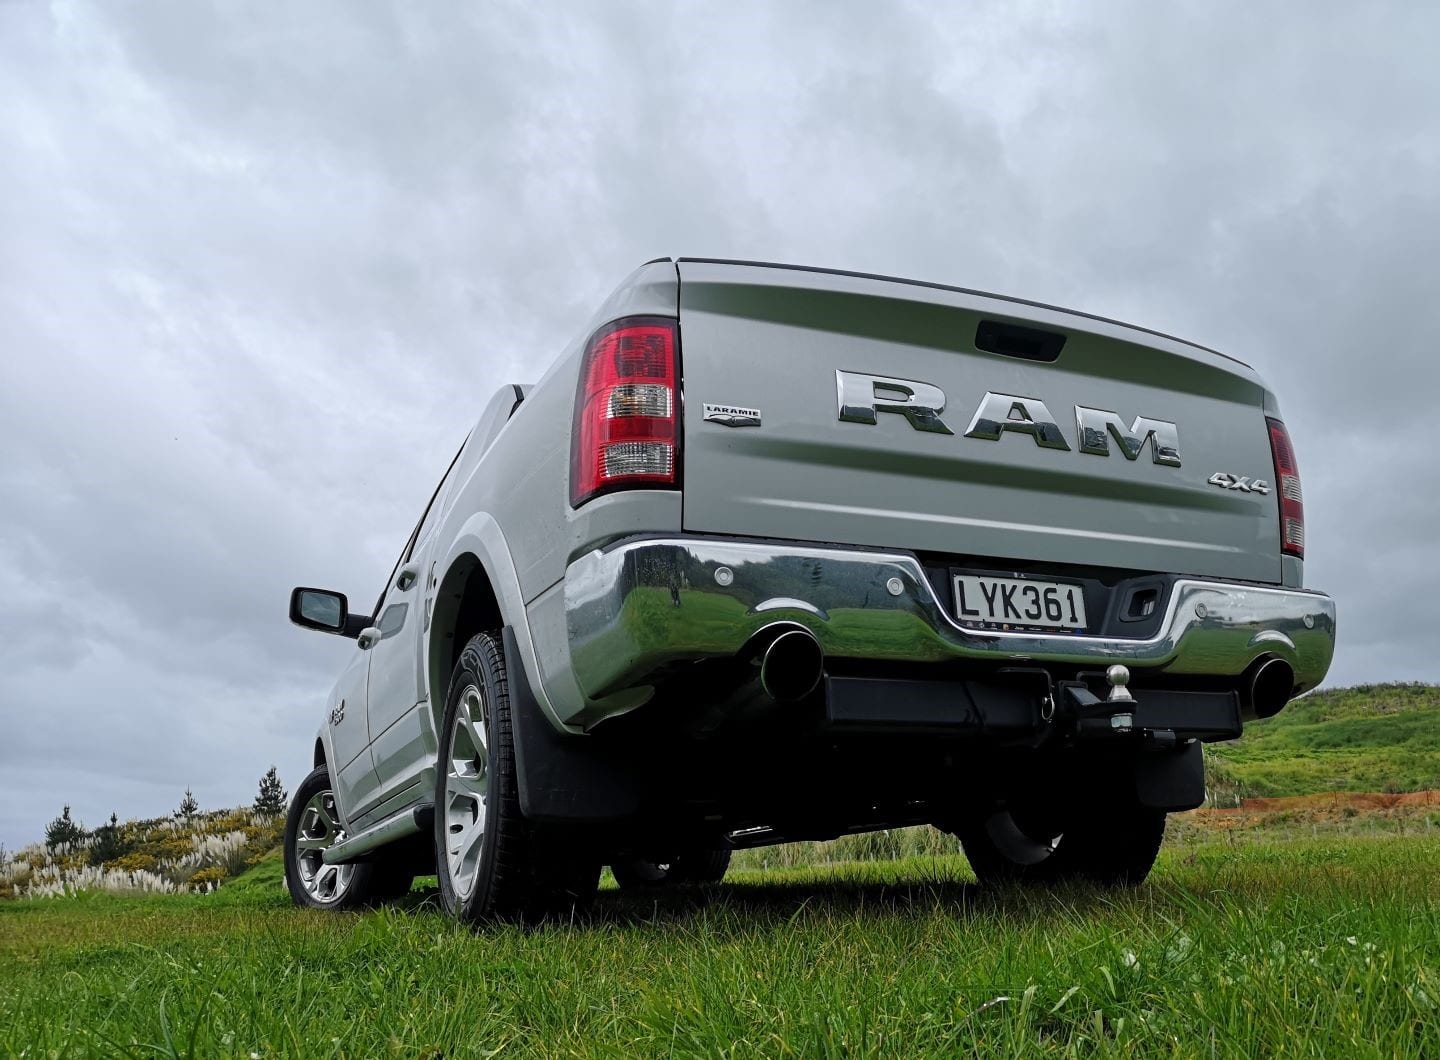 RAM 1500 Laramie Review New Zealand